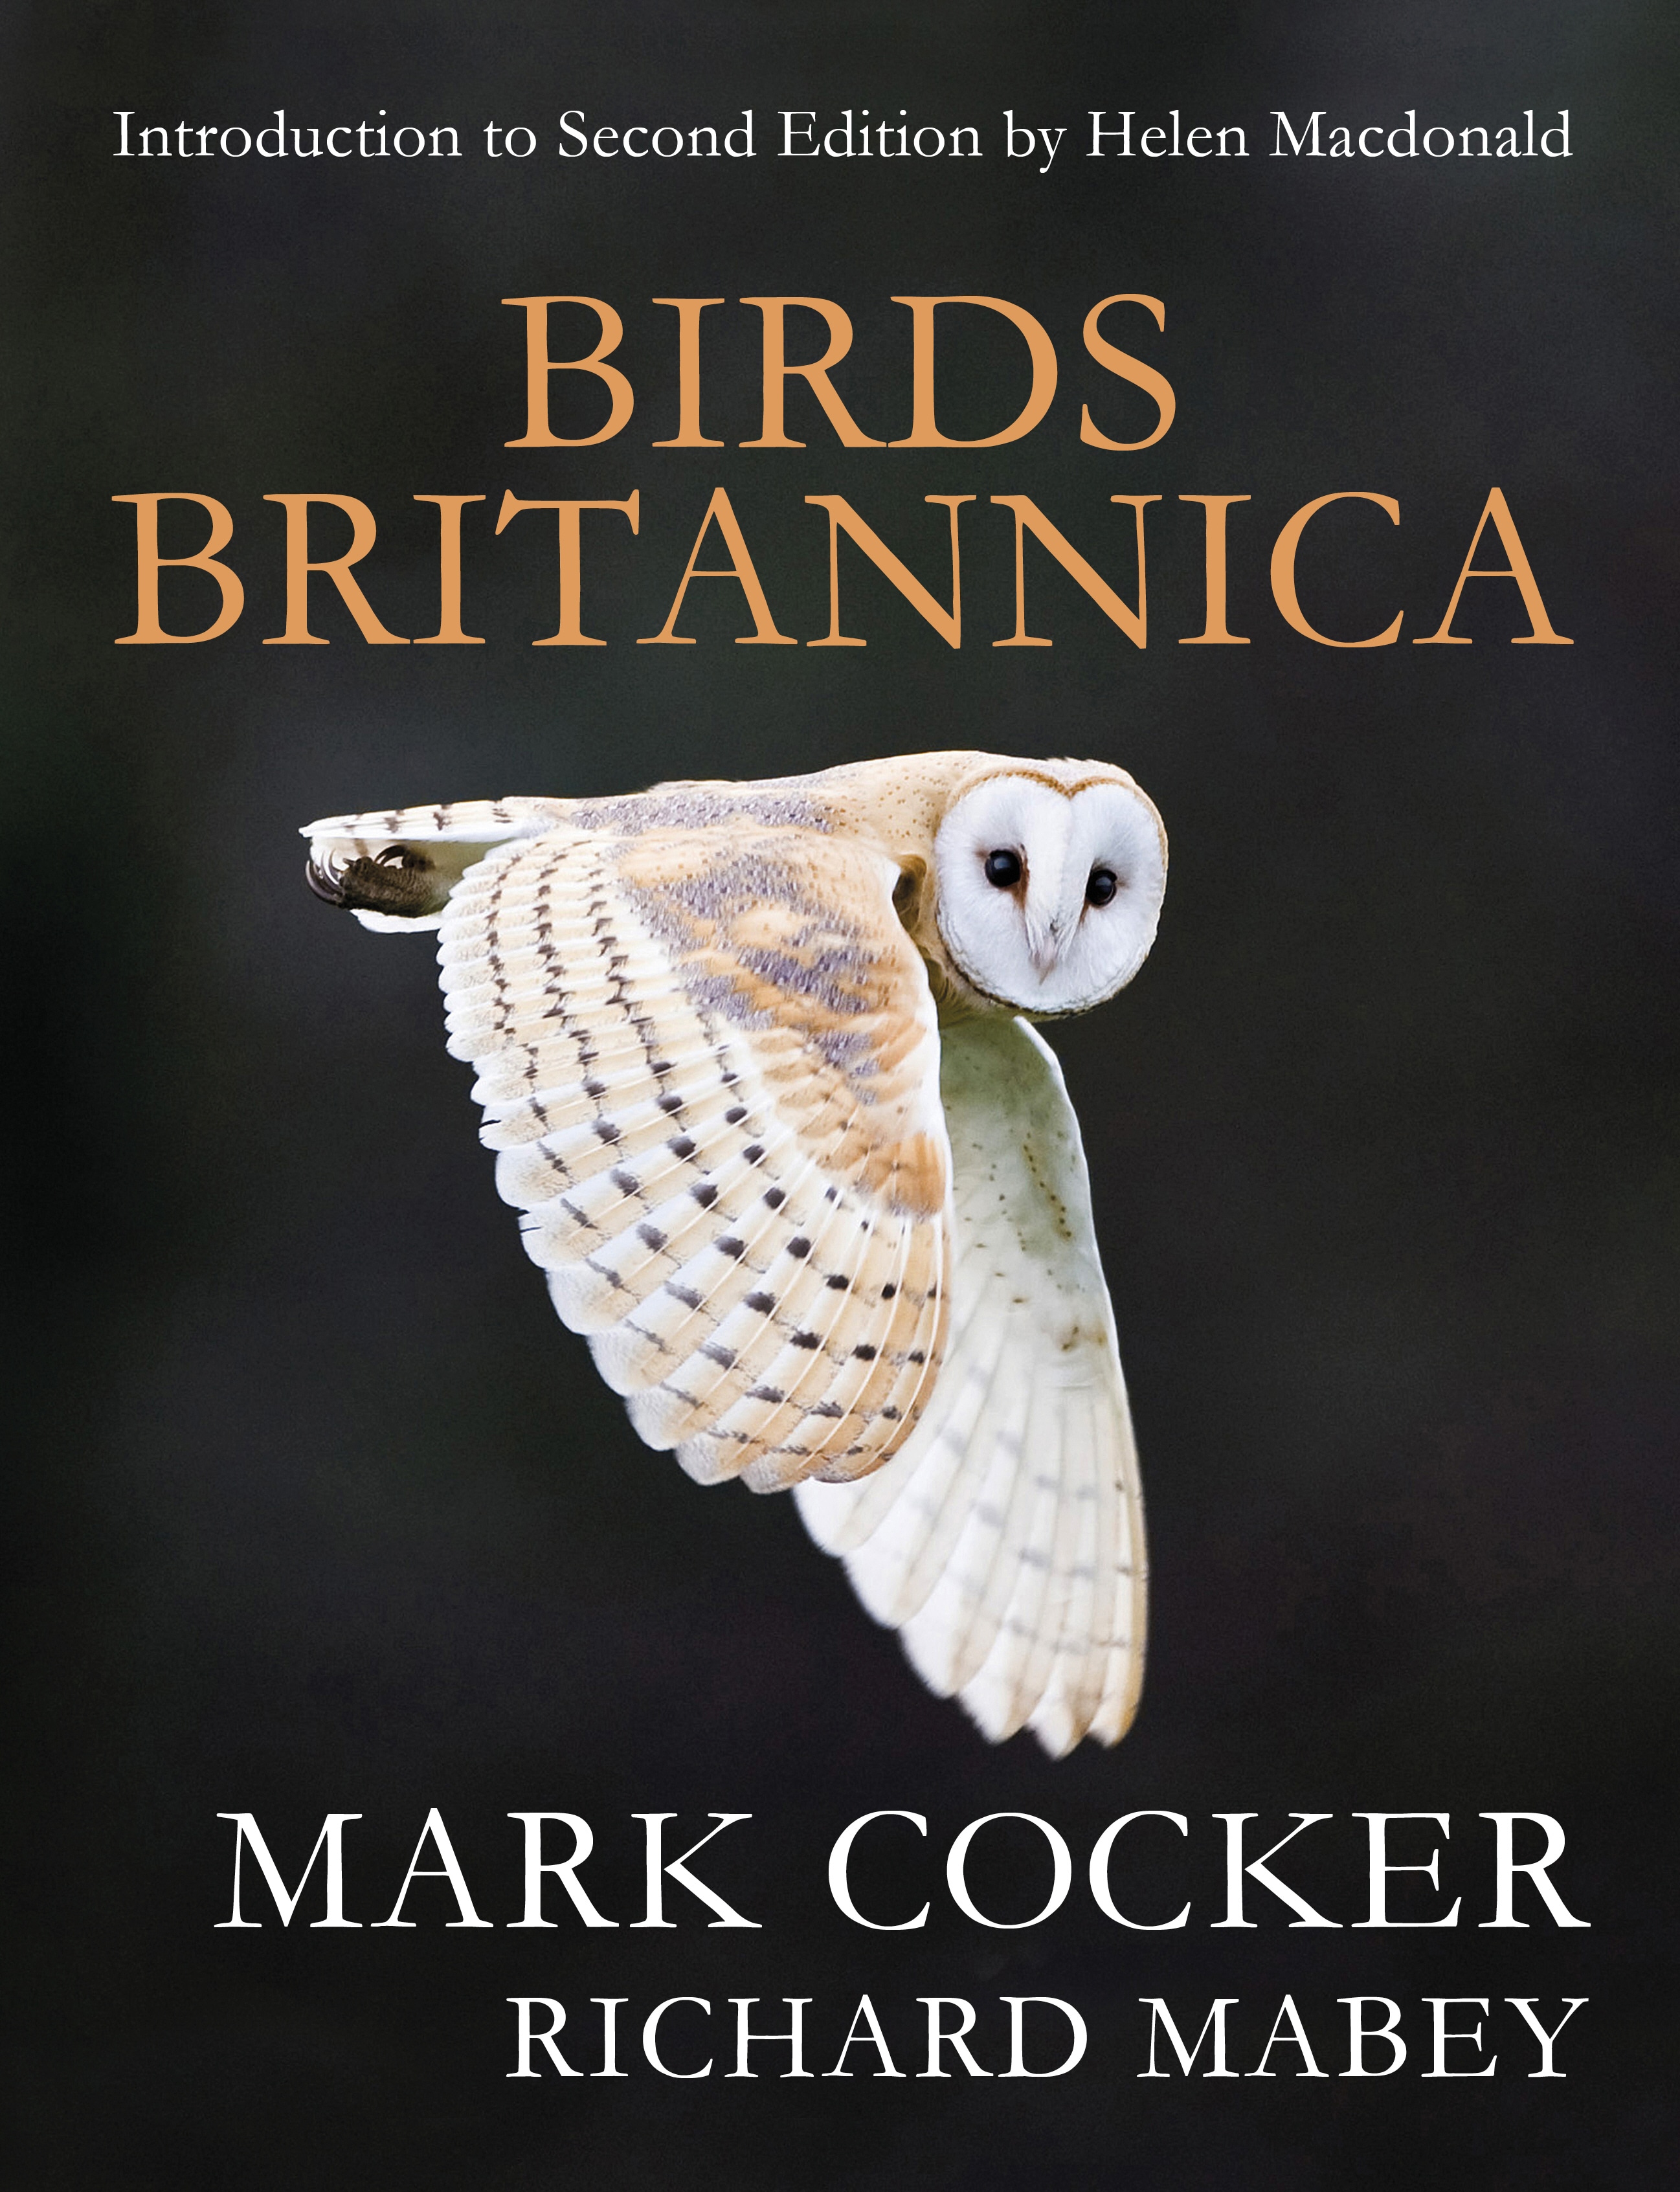 Book “Birds Britannica” by Mark Cocker — April 2, 2020